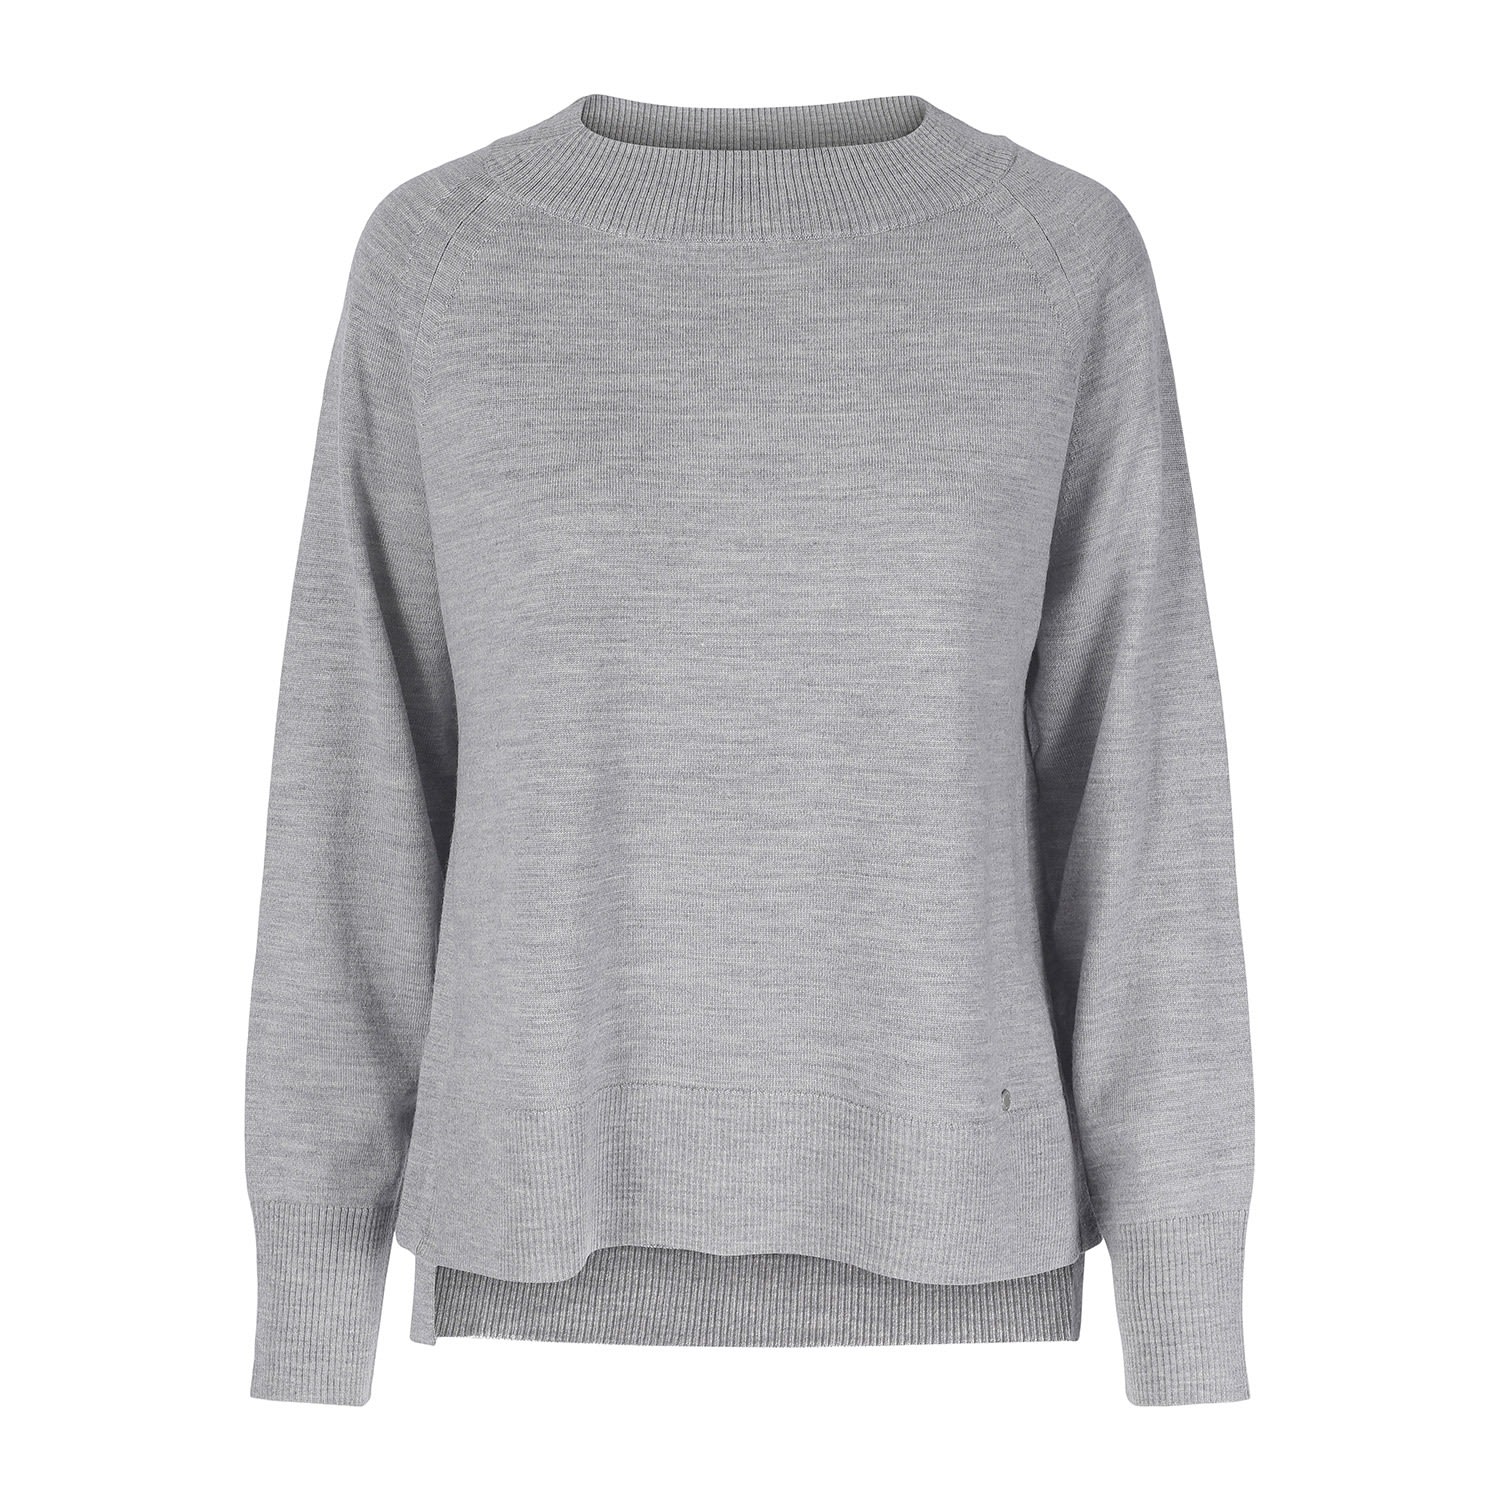 Women’s "Amy" A-Line Merino Wool Sweater - Grey Small Tirillm